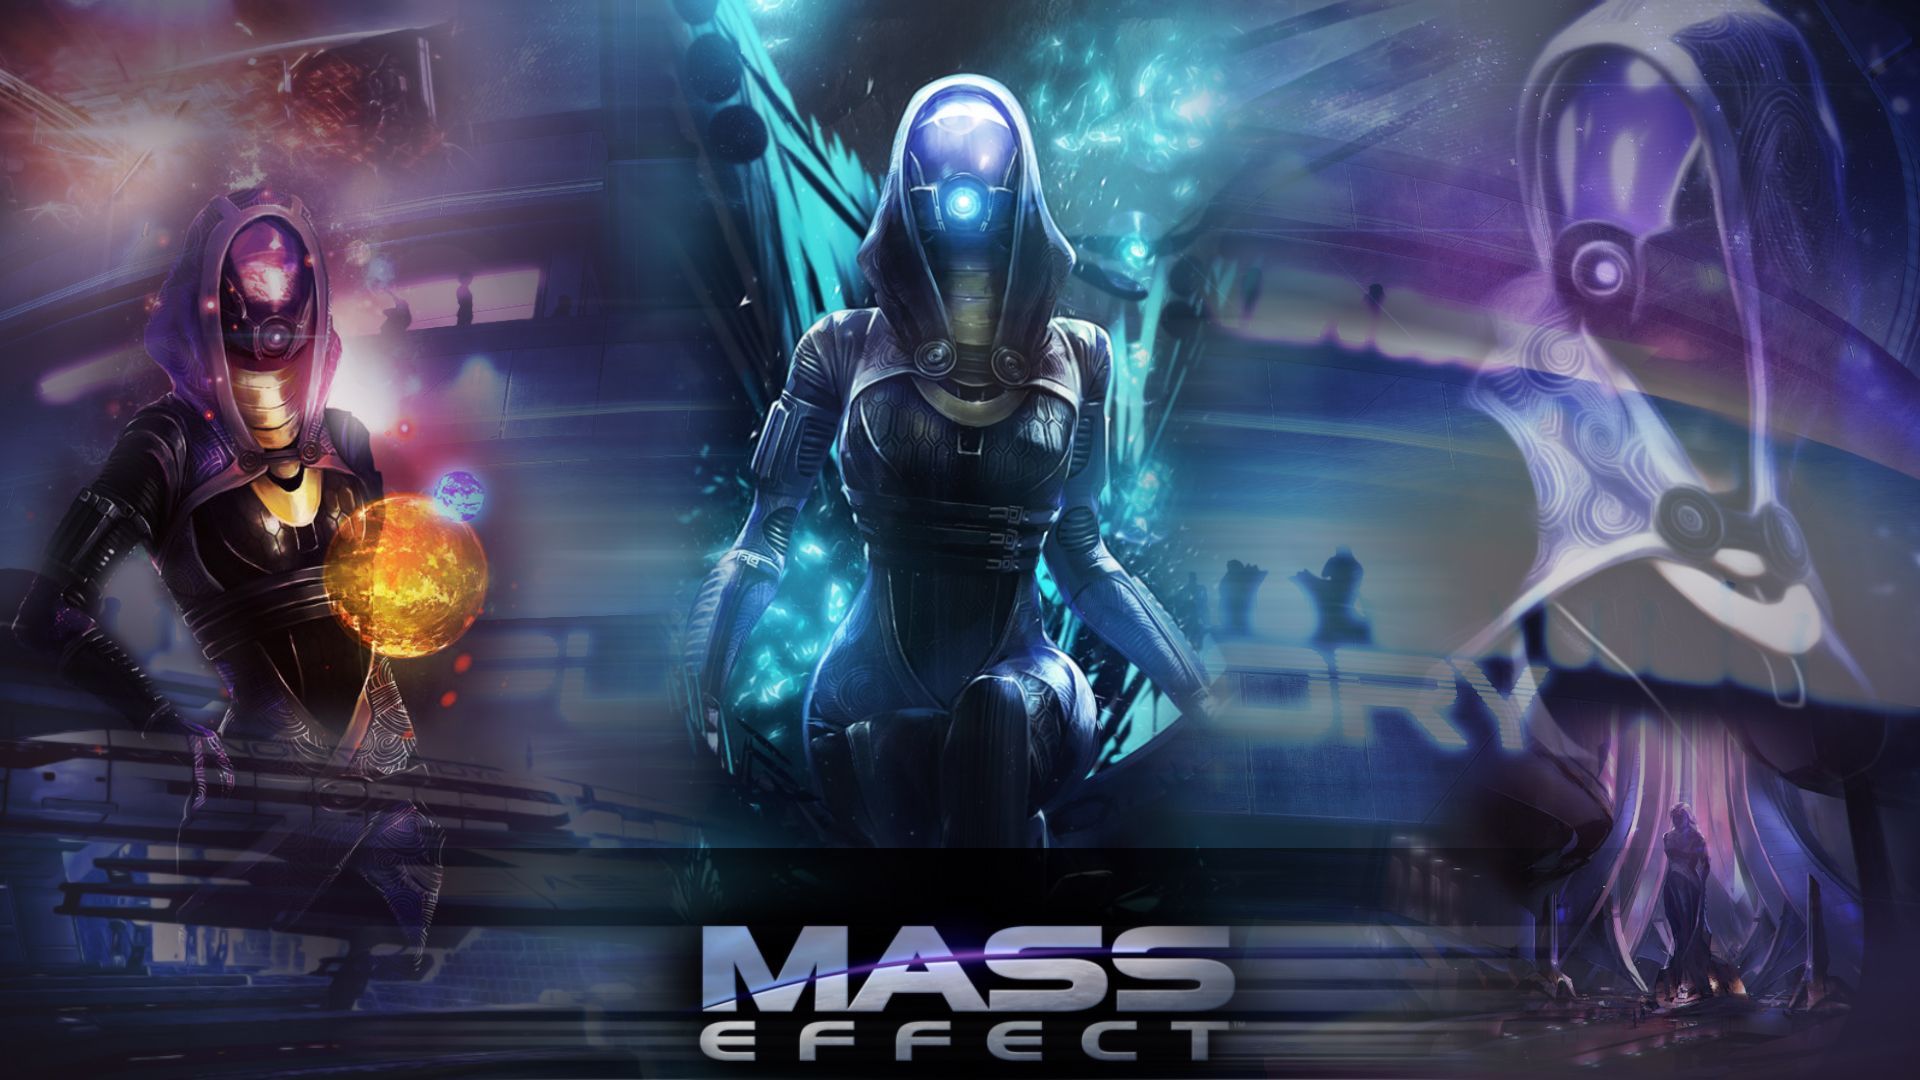 Mass Effect - Tali'zorah Wallpaper by ShunKazami787 on DeviantArt